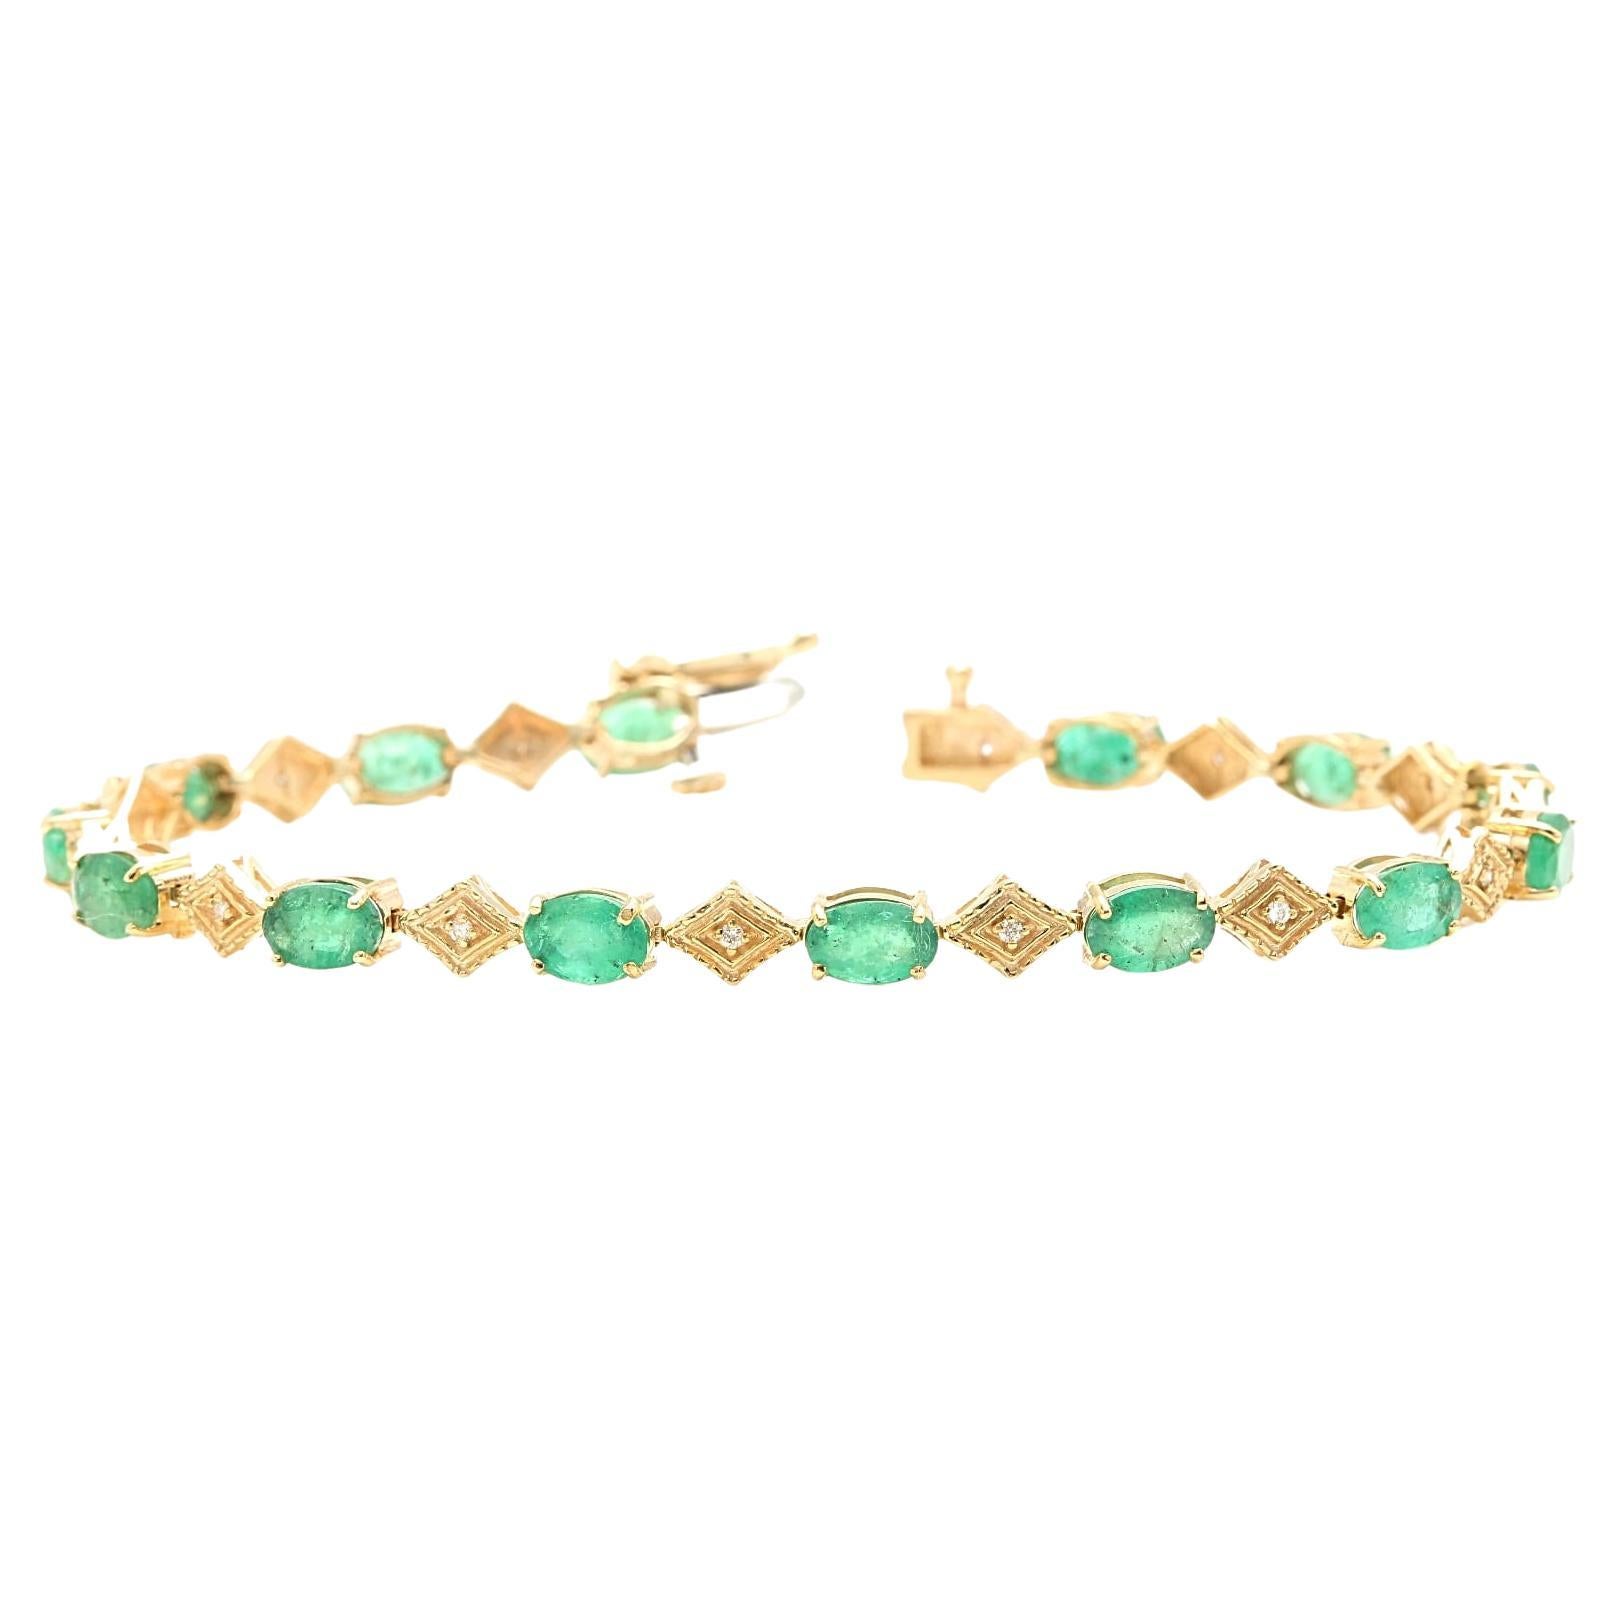 Impressive 9.15 Carats Natural Emerald & Diamond 14K Solid Yellow Gold Bracelet For Sale